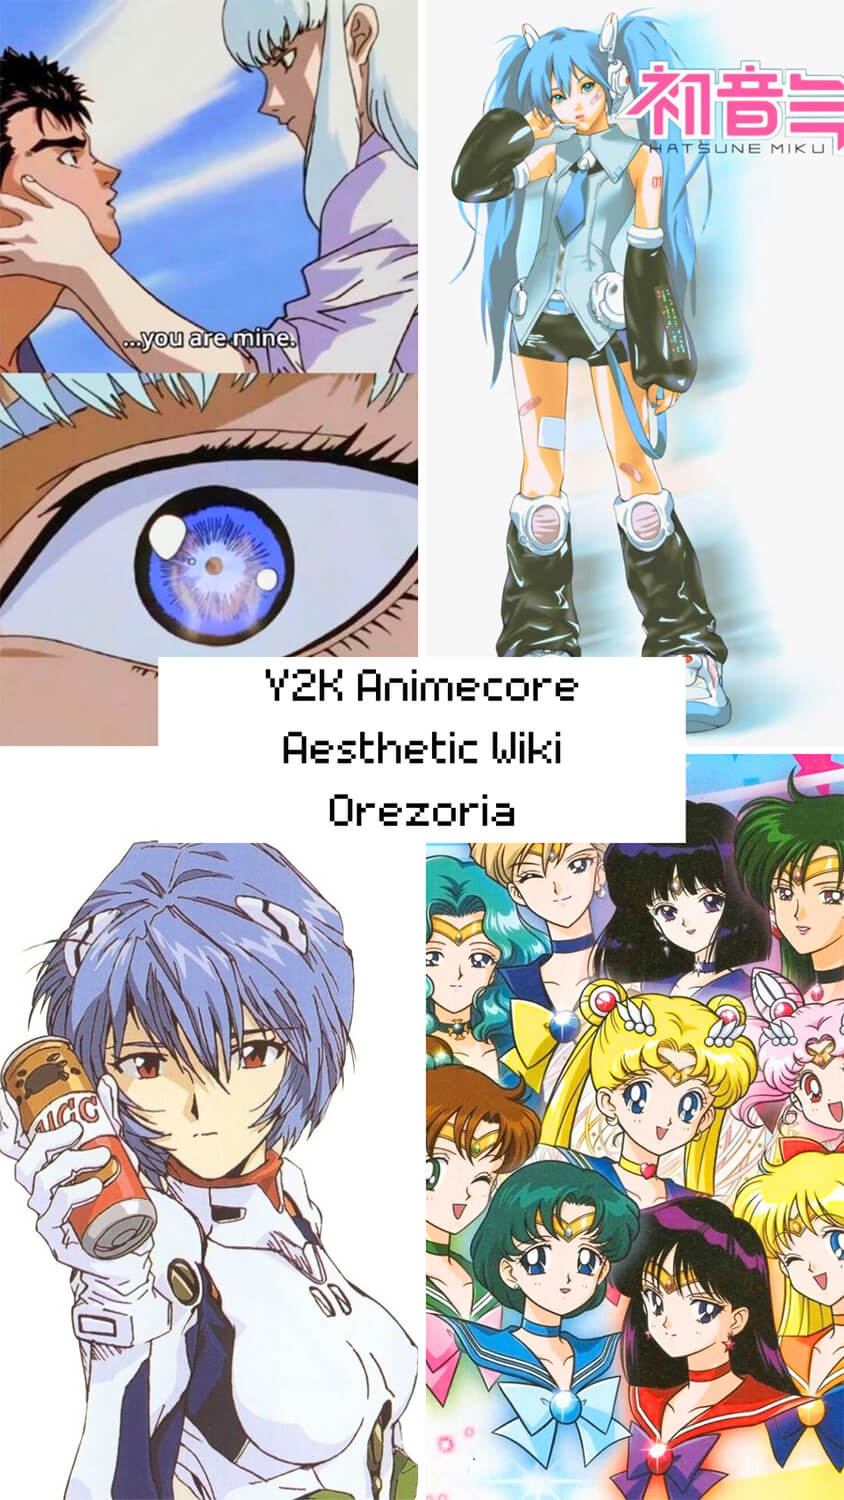 Episode 1 (1997 Anime), Berserk Wiki